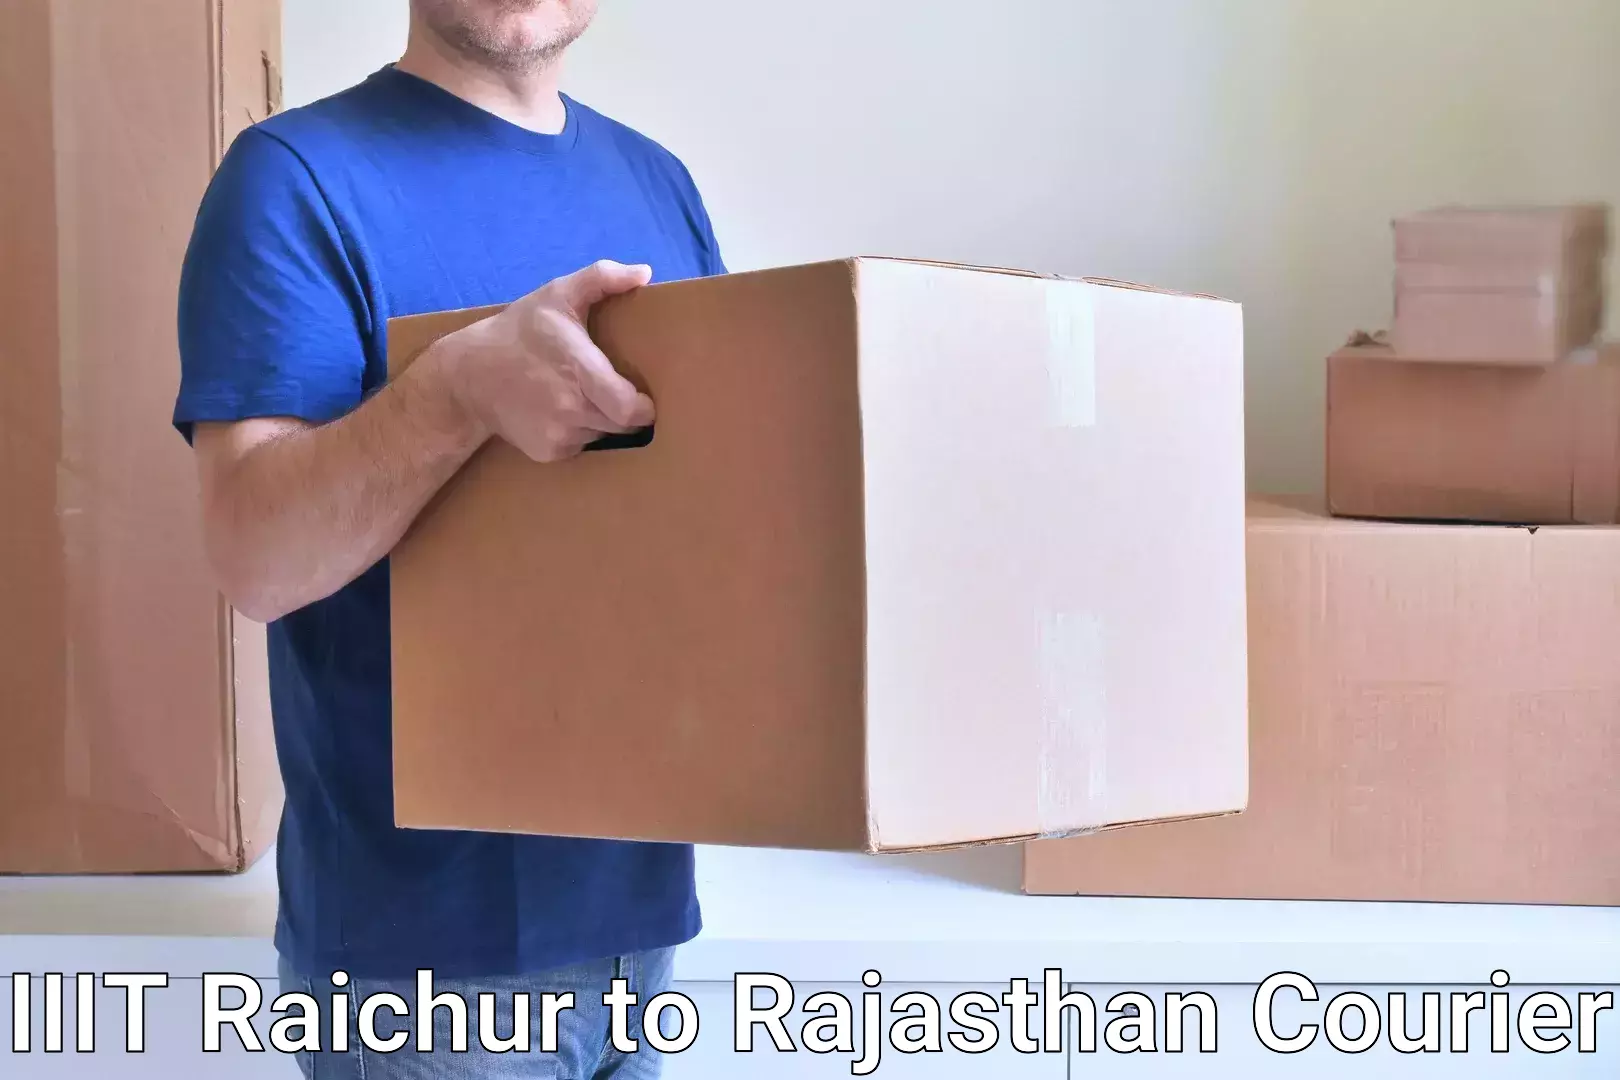 Courier service efficiency IIIT Raichur to Tibbi